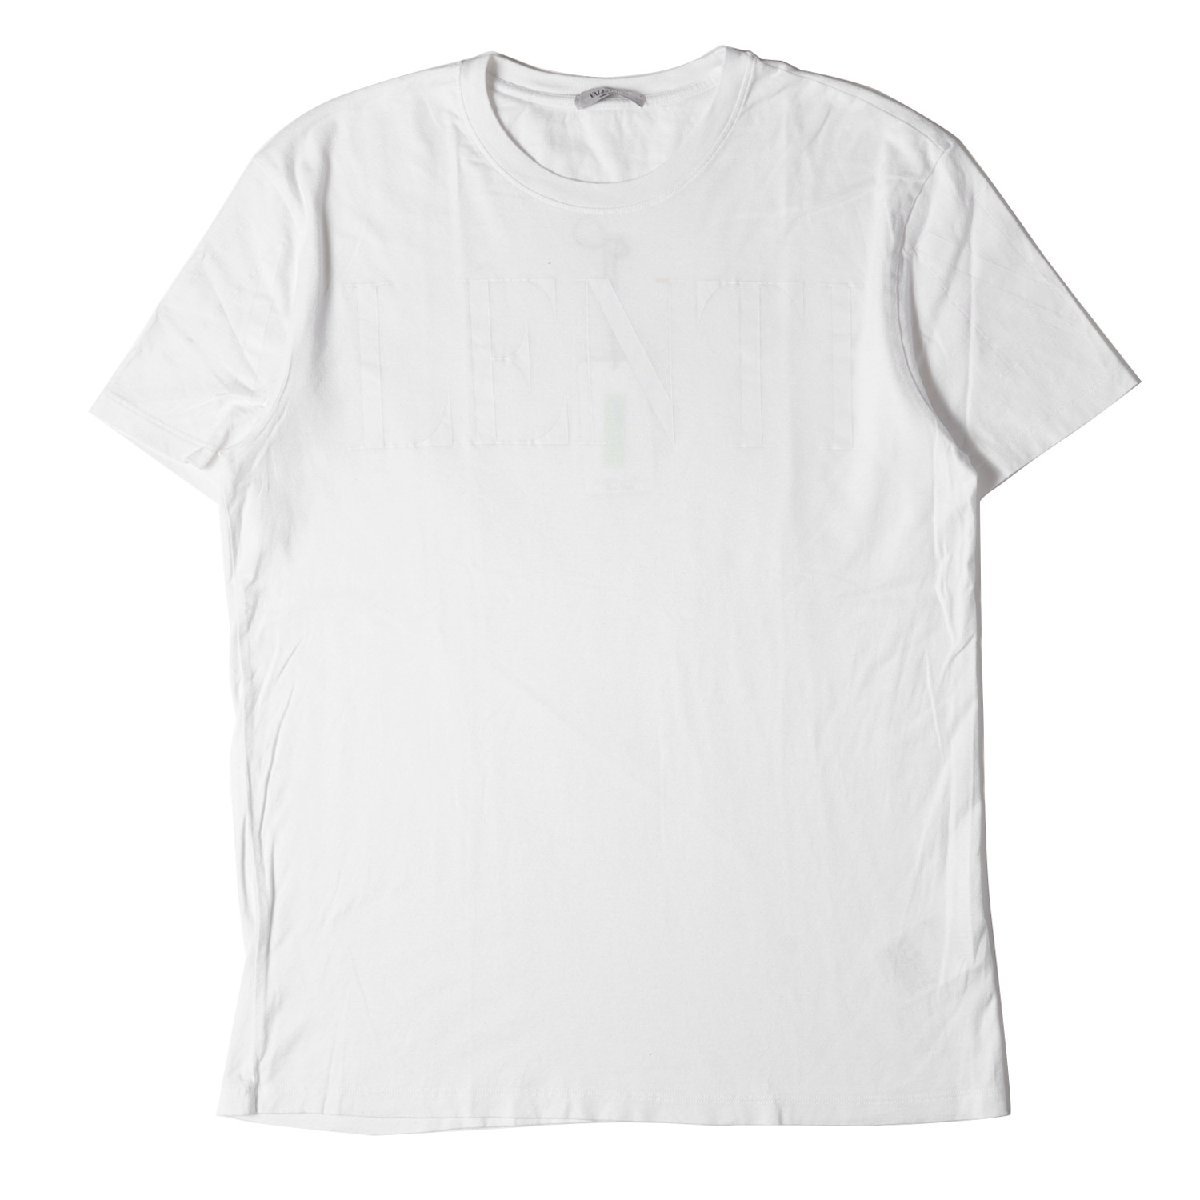 VALENTINO ヴァレンティノ Tシャツ ビッグロゴ クルーネックTシャツ 2018年モデル ホワイト 白 L UV3MG03B5FN トップス カットソー 半袖